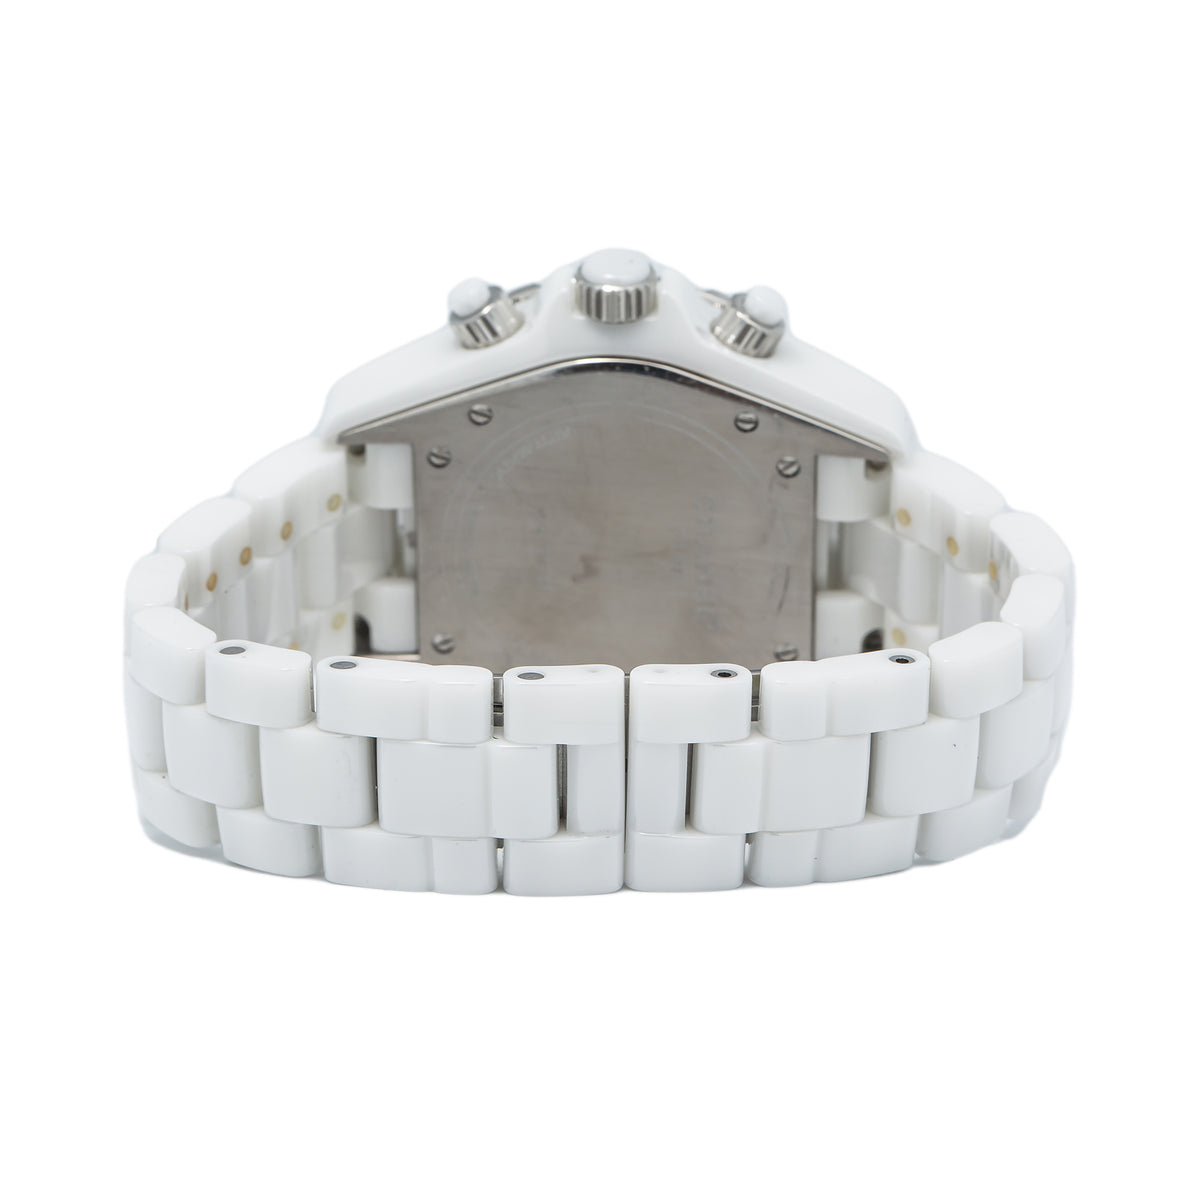 Chanel J12 H1008 Automatic Ceramic White Dial Diamond Bezel Ladies Watch 41mm